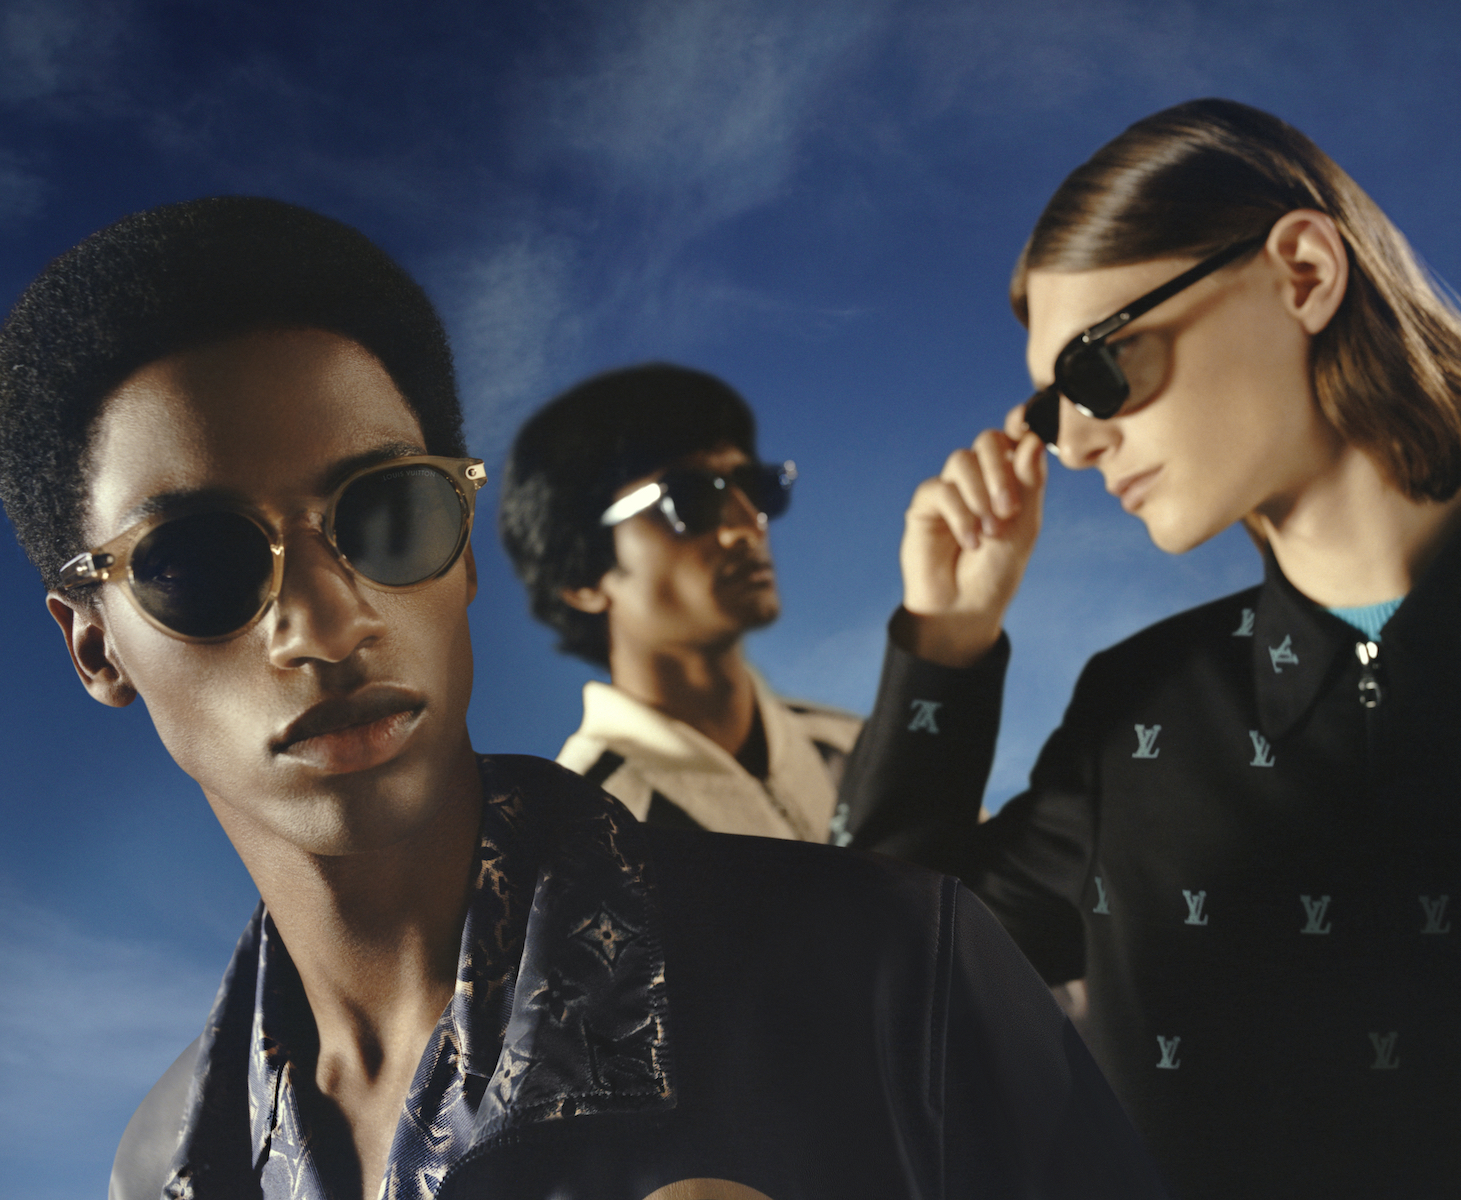 Discover Louis Vuitton LV Rise Metal Square Sunglasses: The